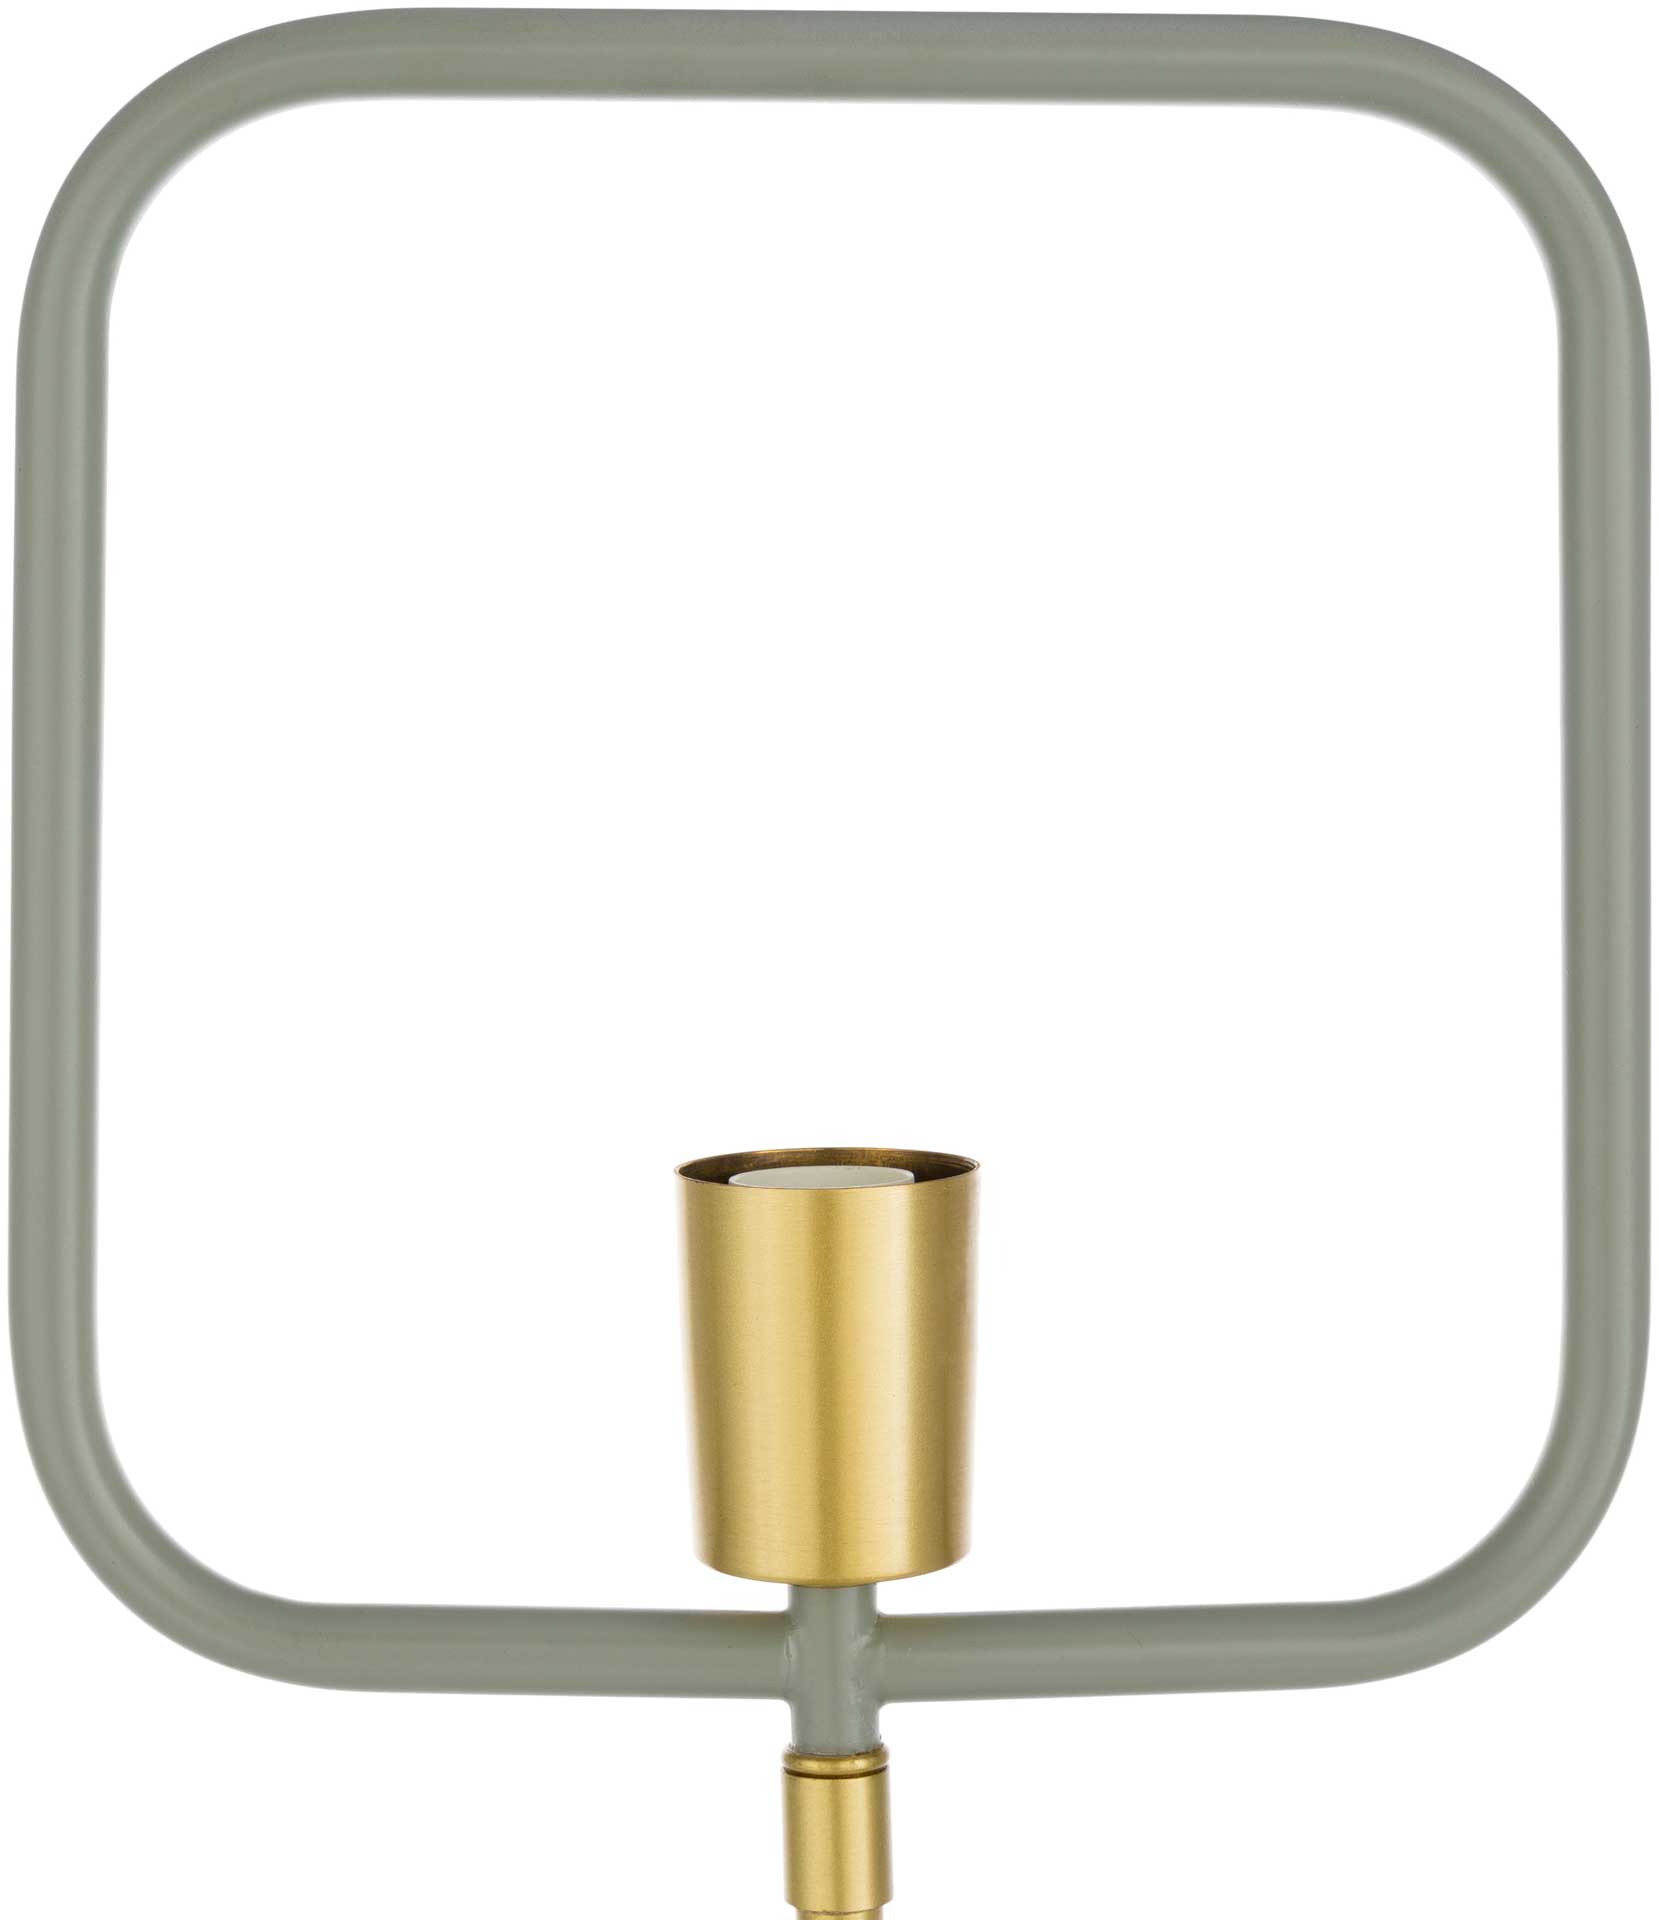 Bodhi Table Lamp Medium Gray/Gray/Brass